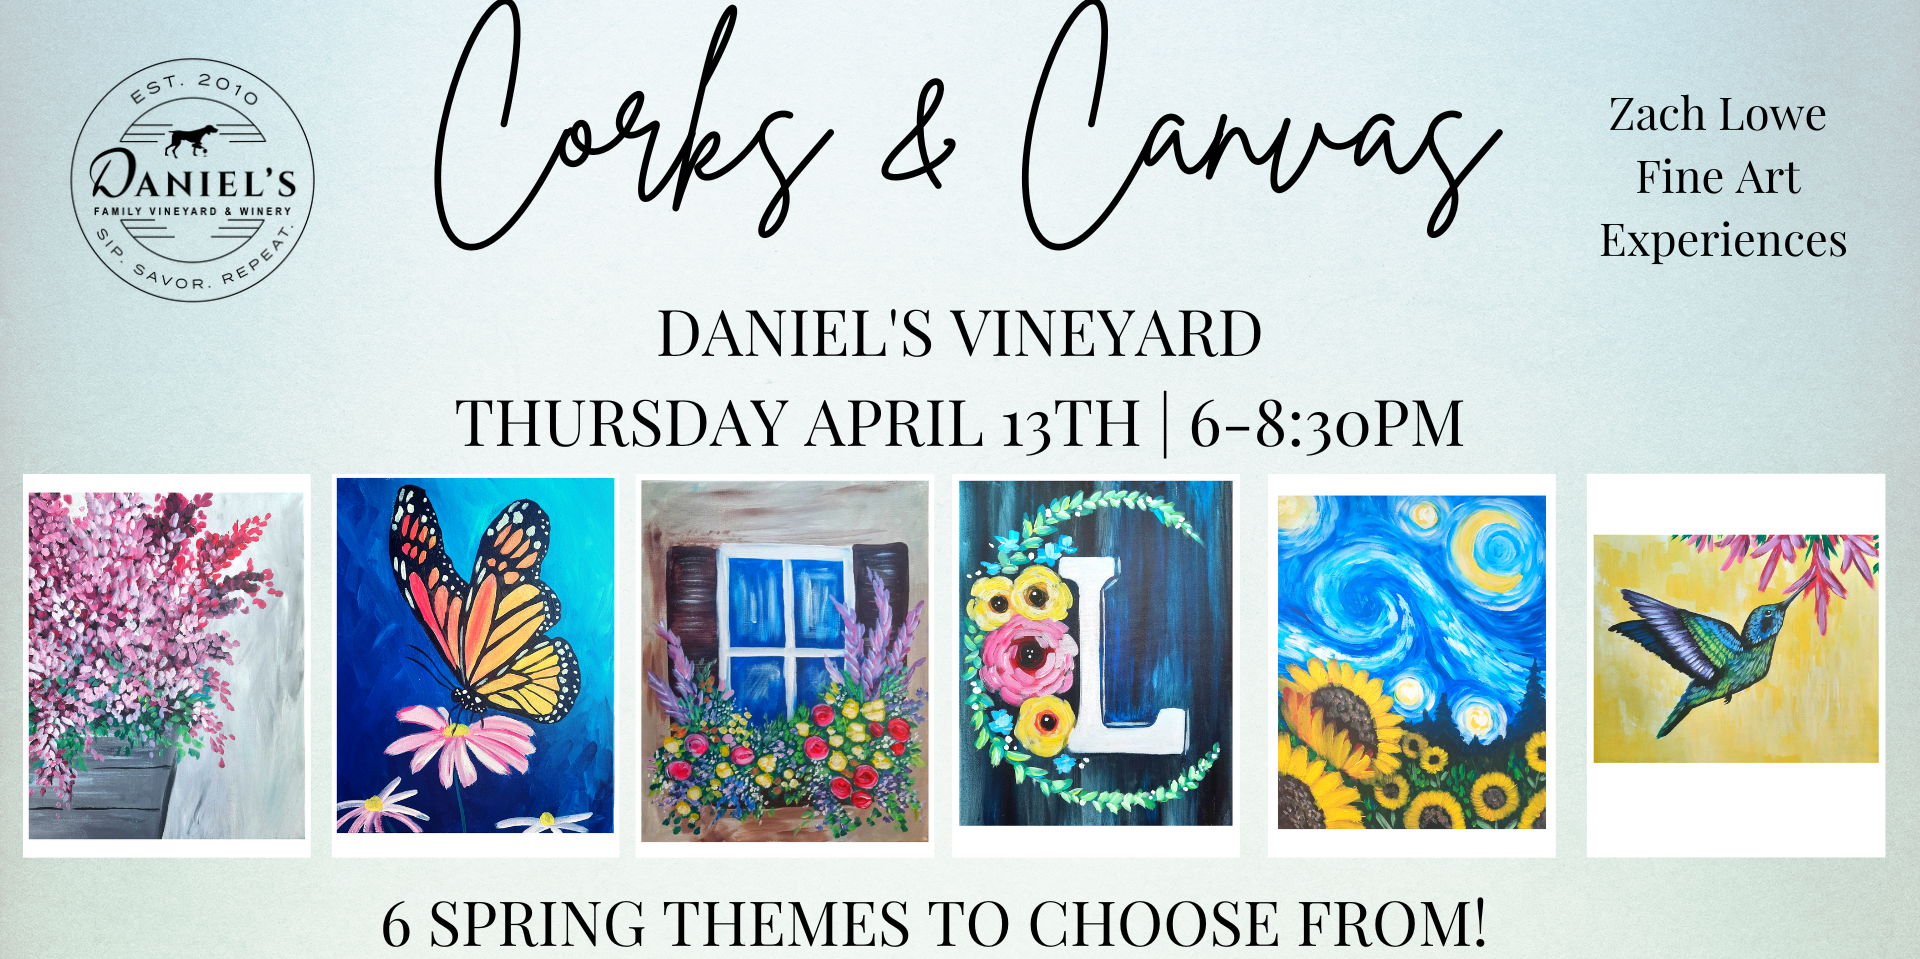 Corks & Canvas at Daniel's Vineyard promotional image